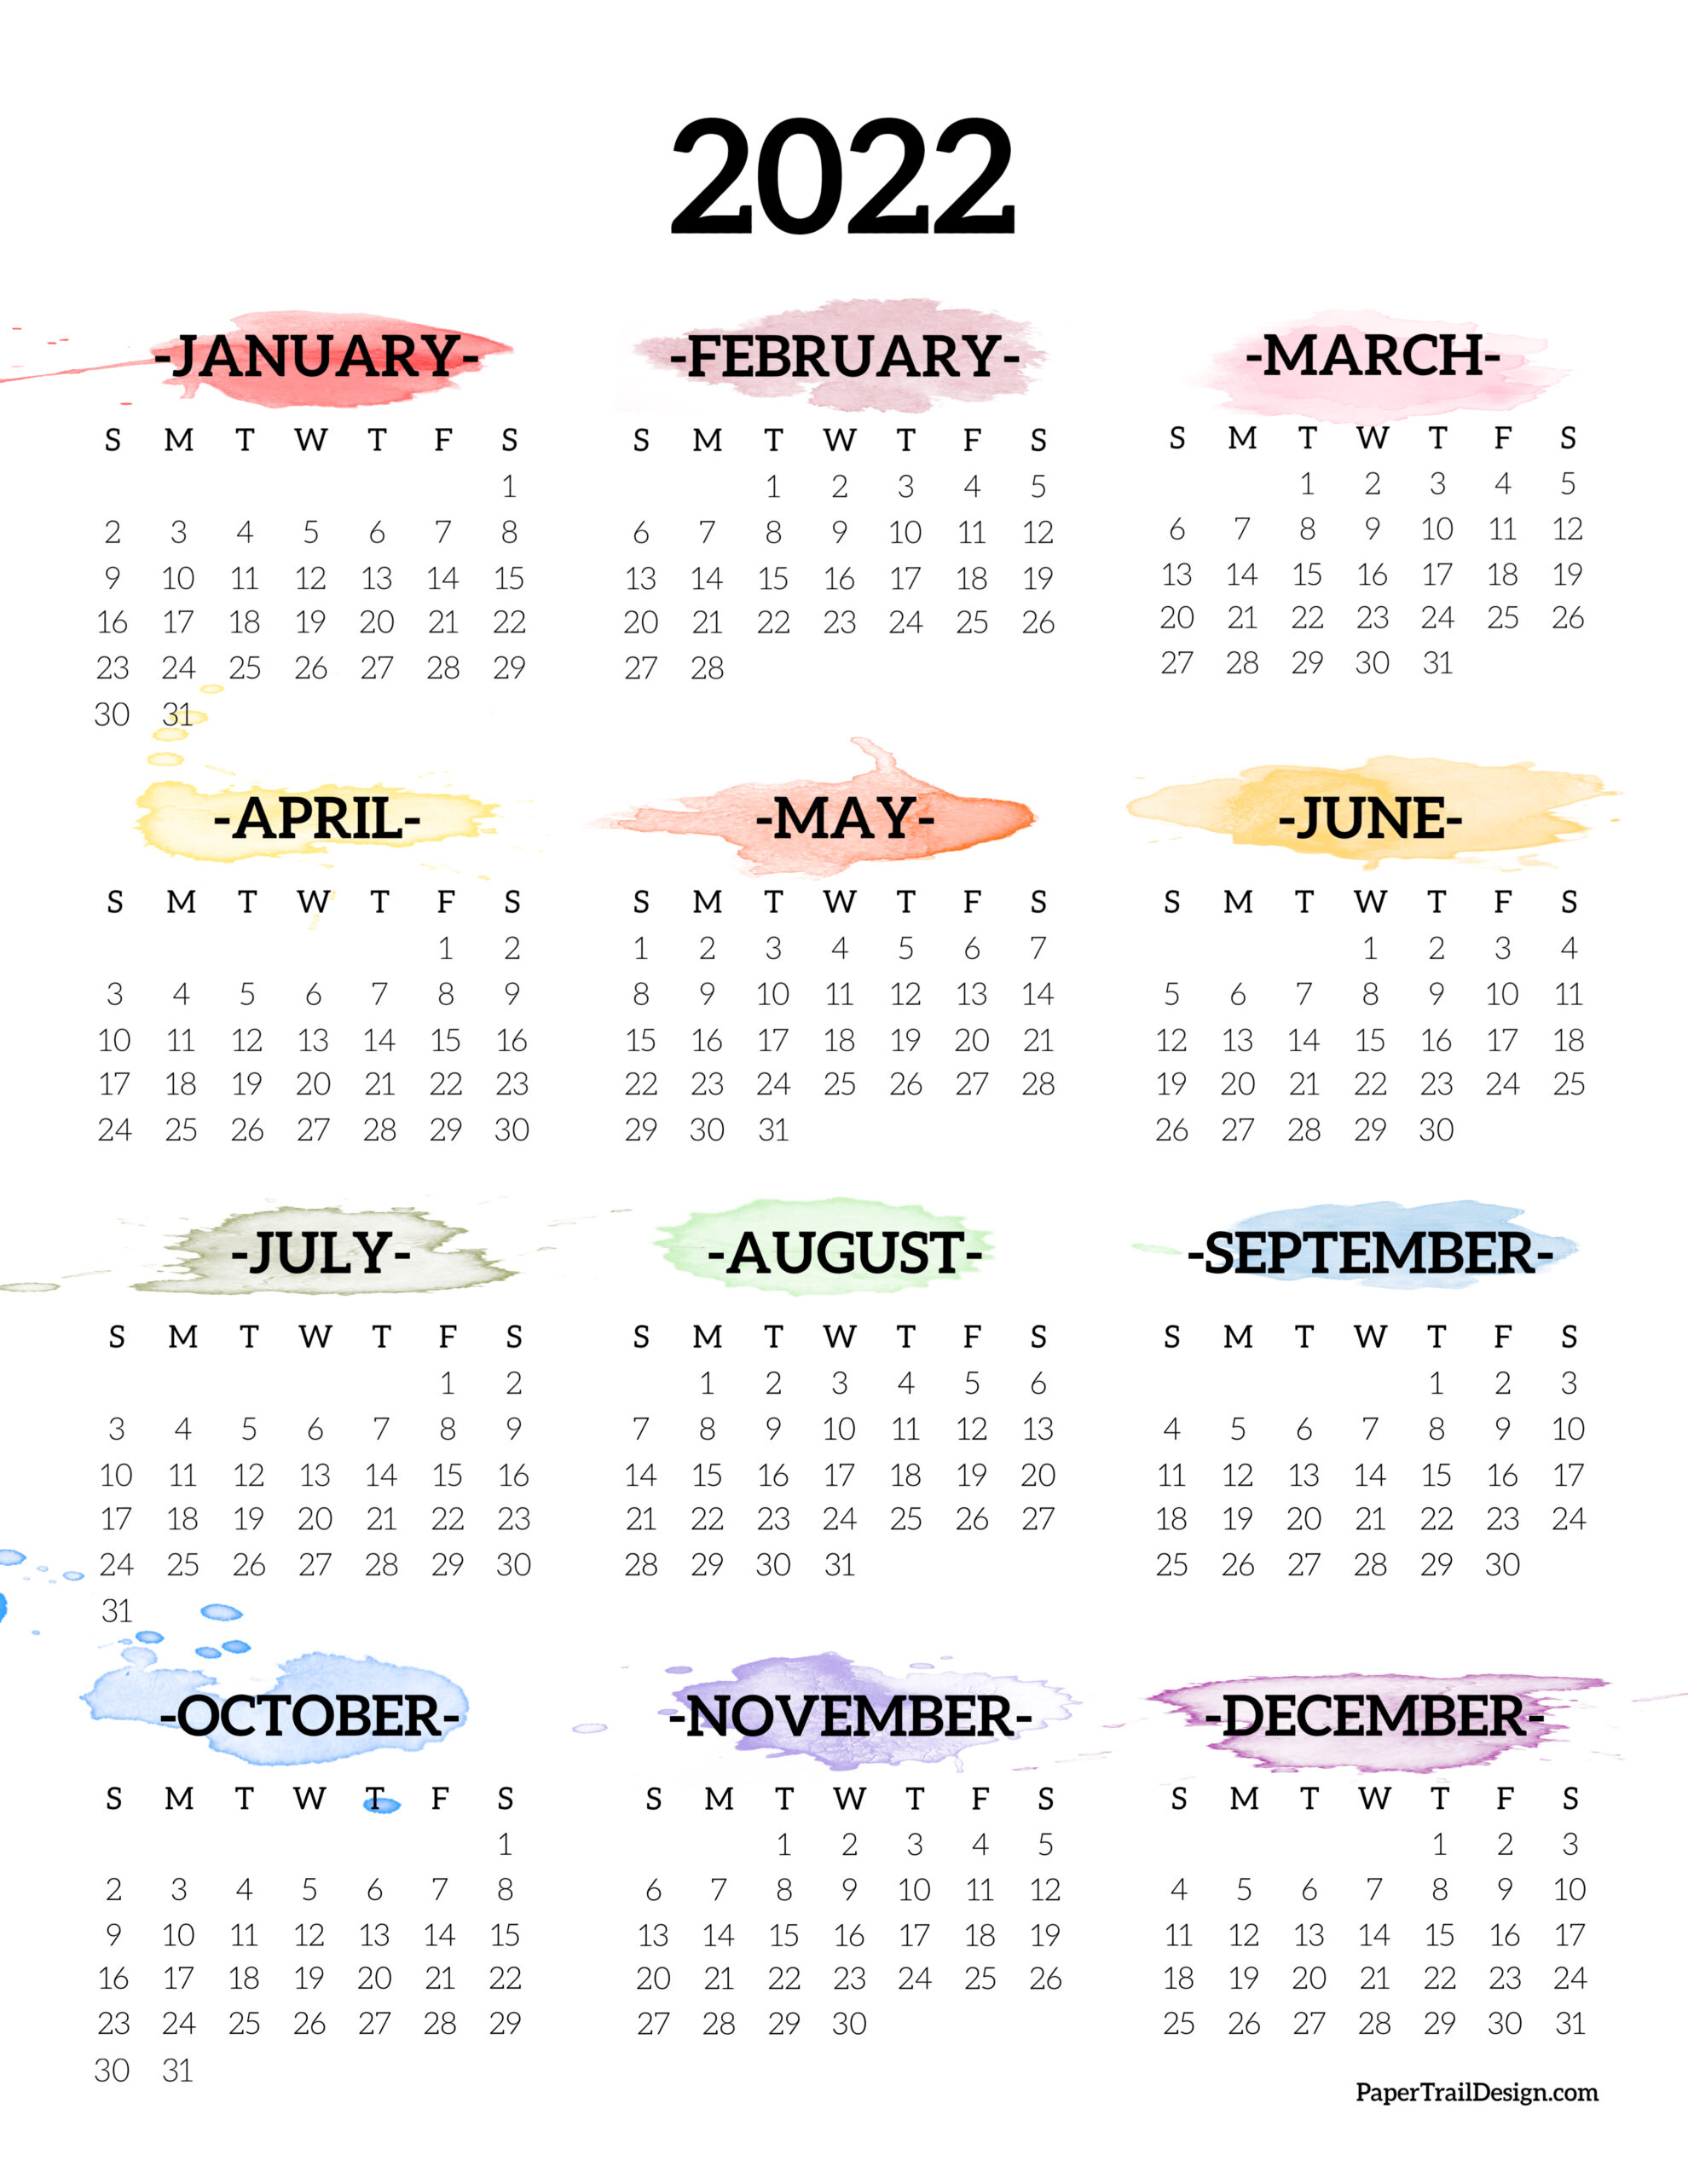 Print Calendar 2022 2022 One Page Calendar Printable - Watercolor - Paper Trail Design